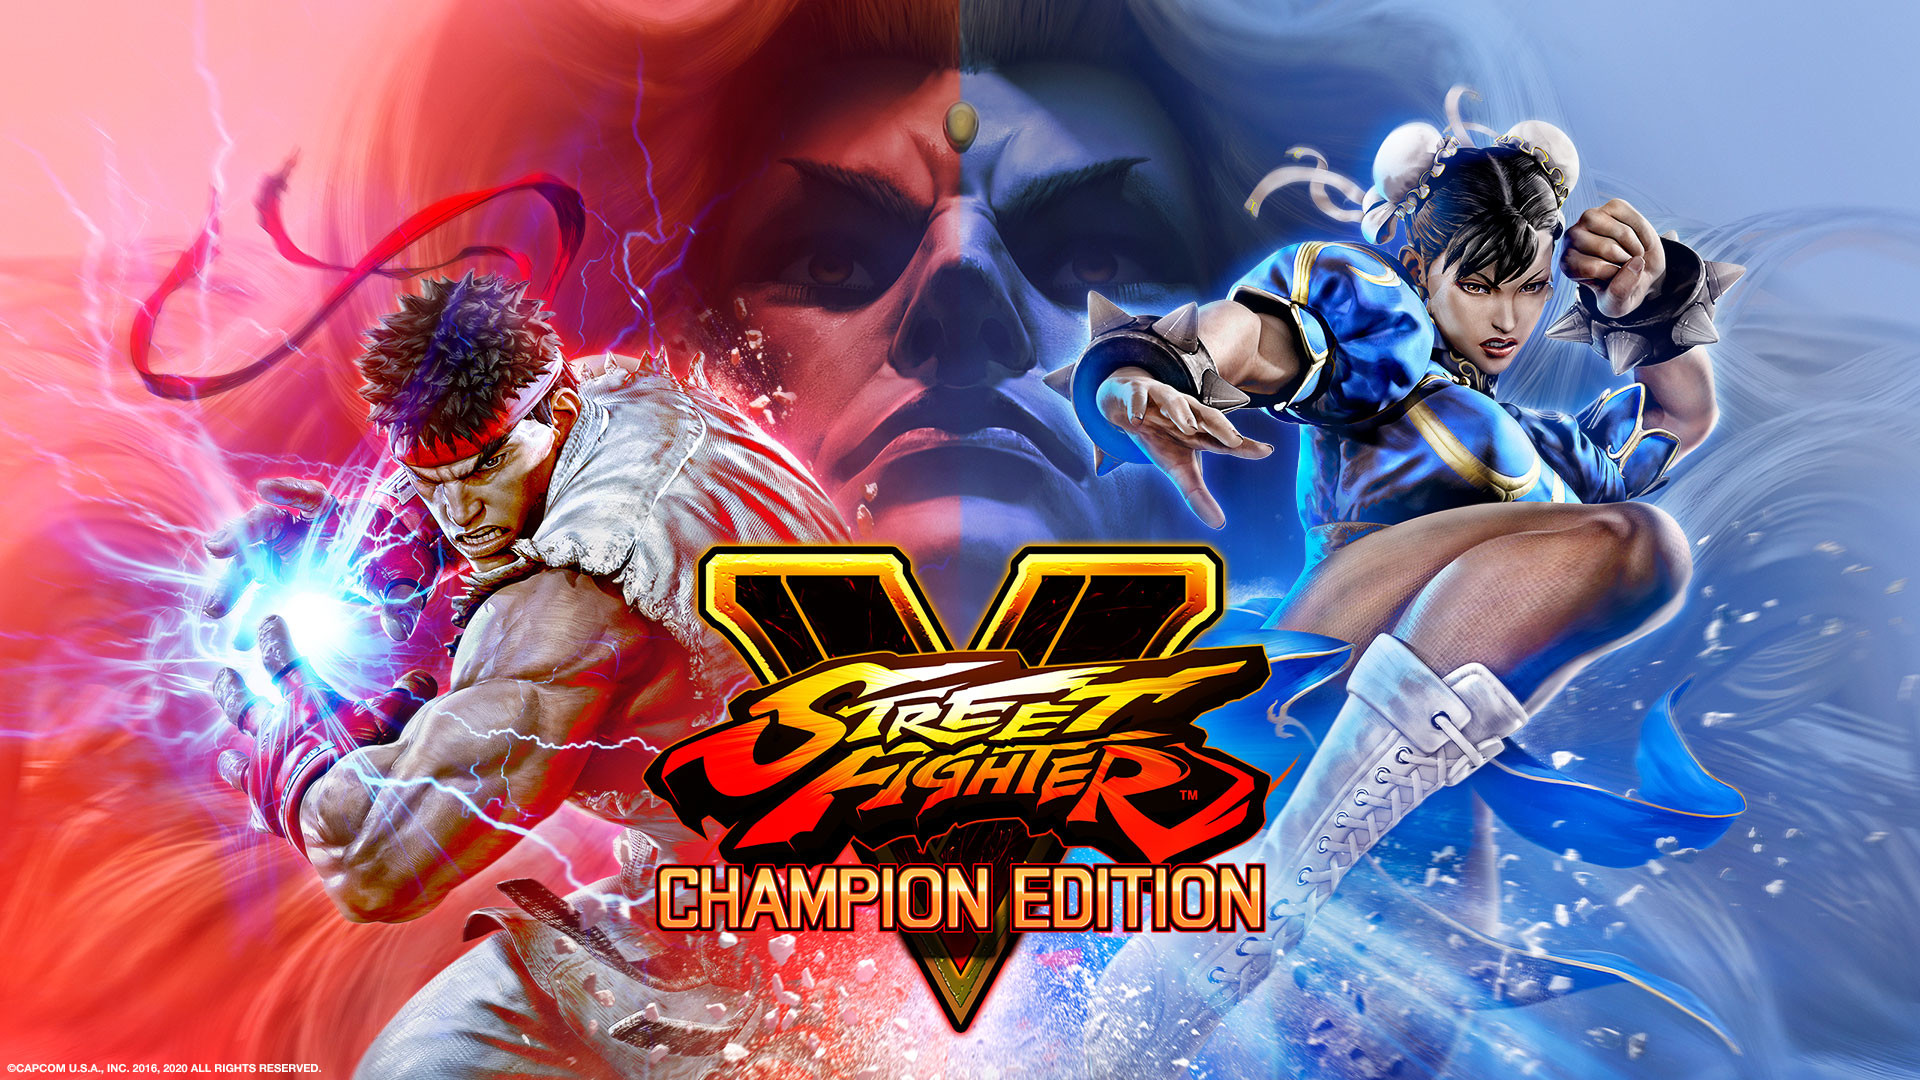 https://www.gametutorials.com/wp-content/uploads/2020/08/Street-Fighter-V-Champion-Edition.jpg